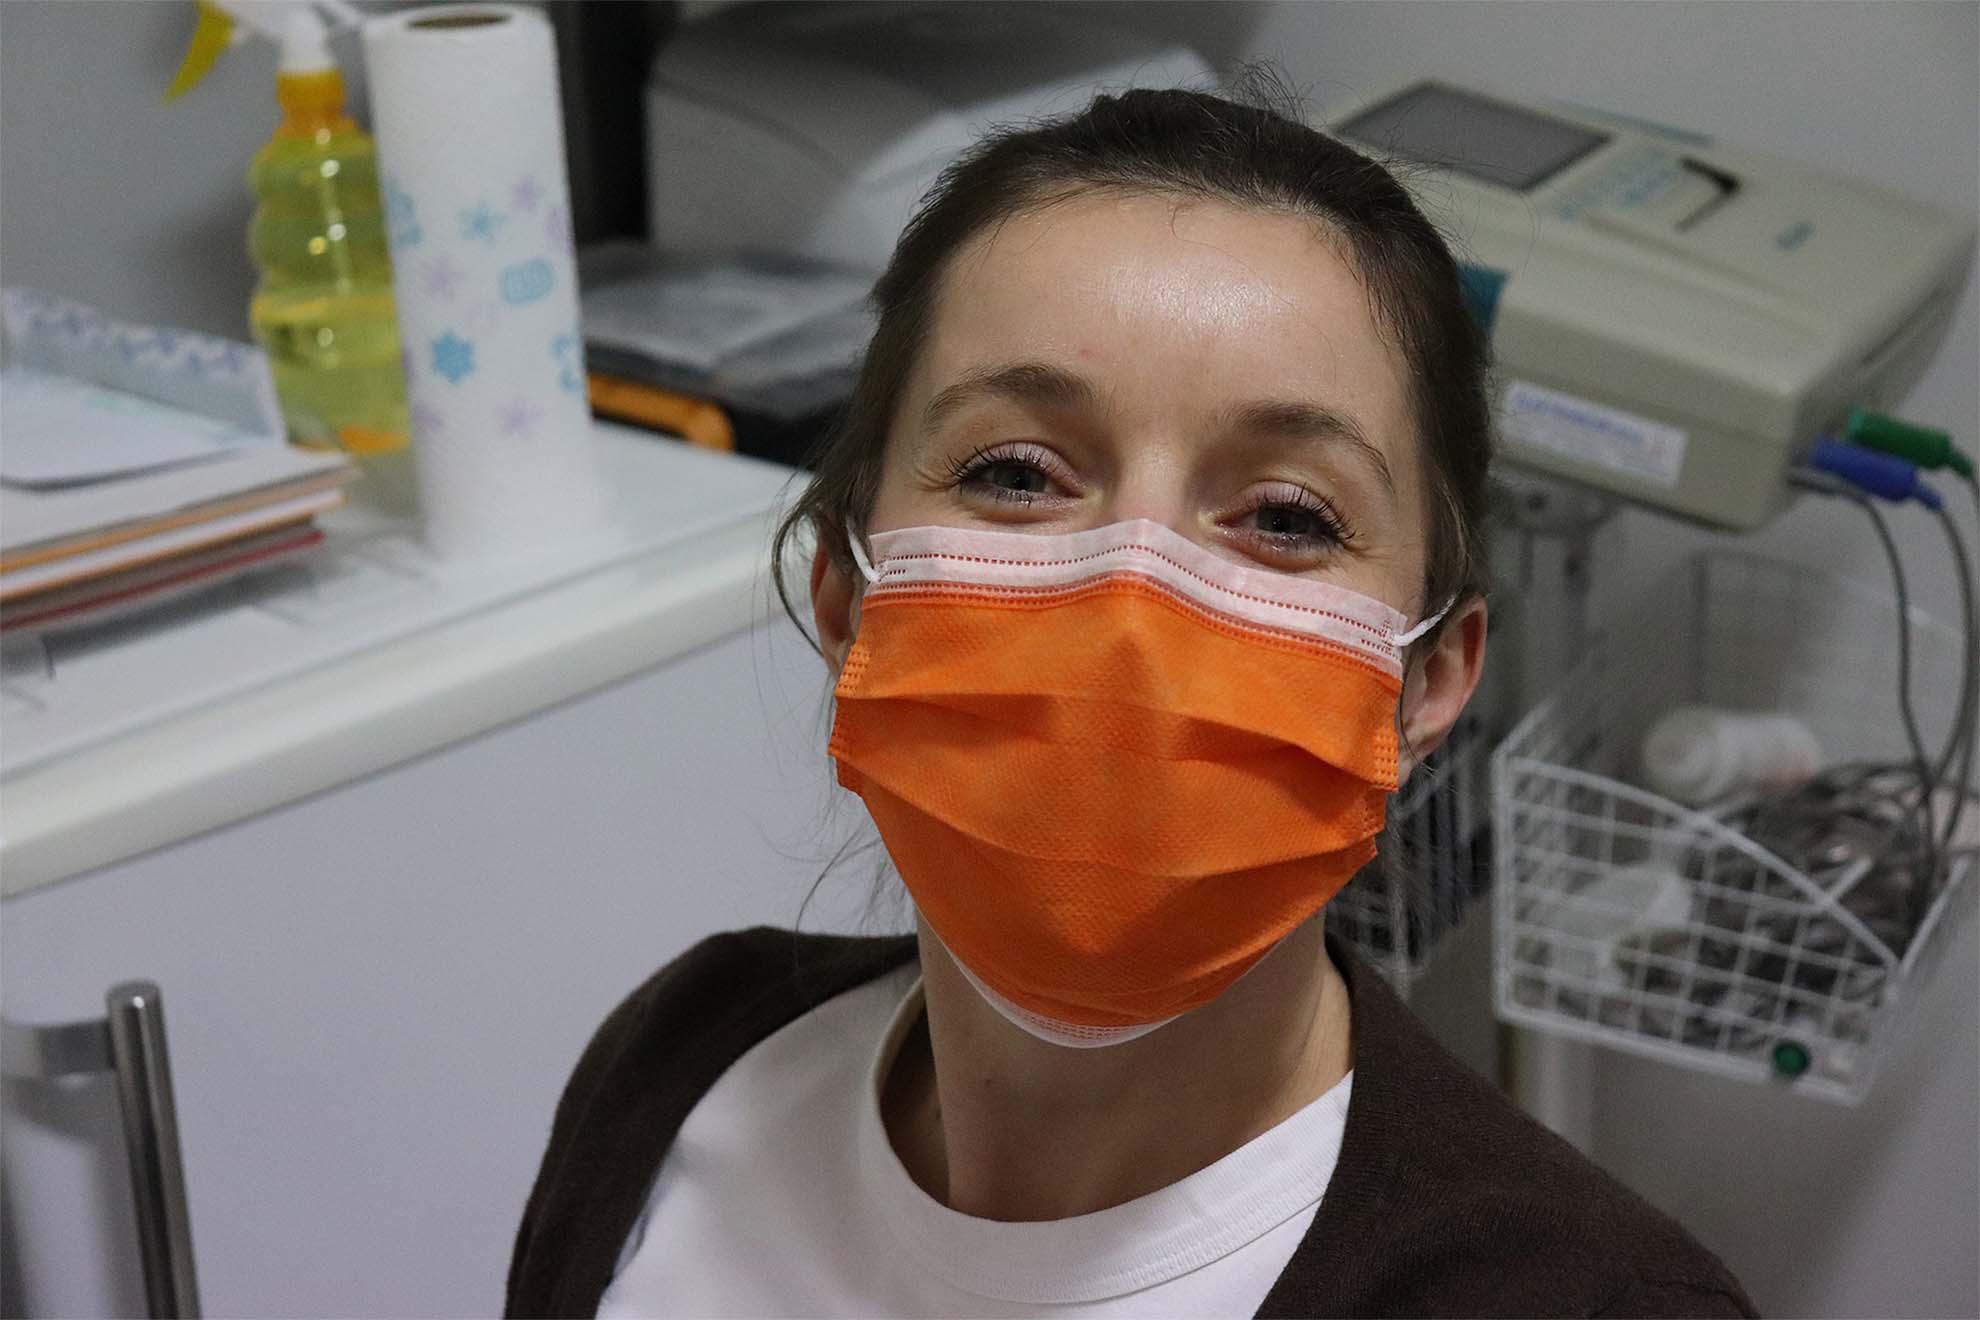 A nurse wearing an orange face mask